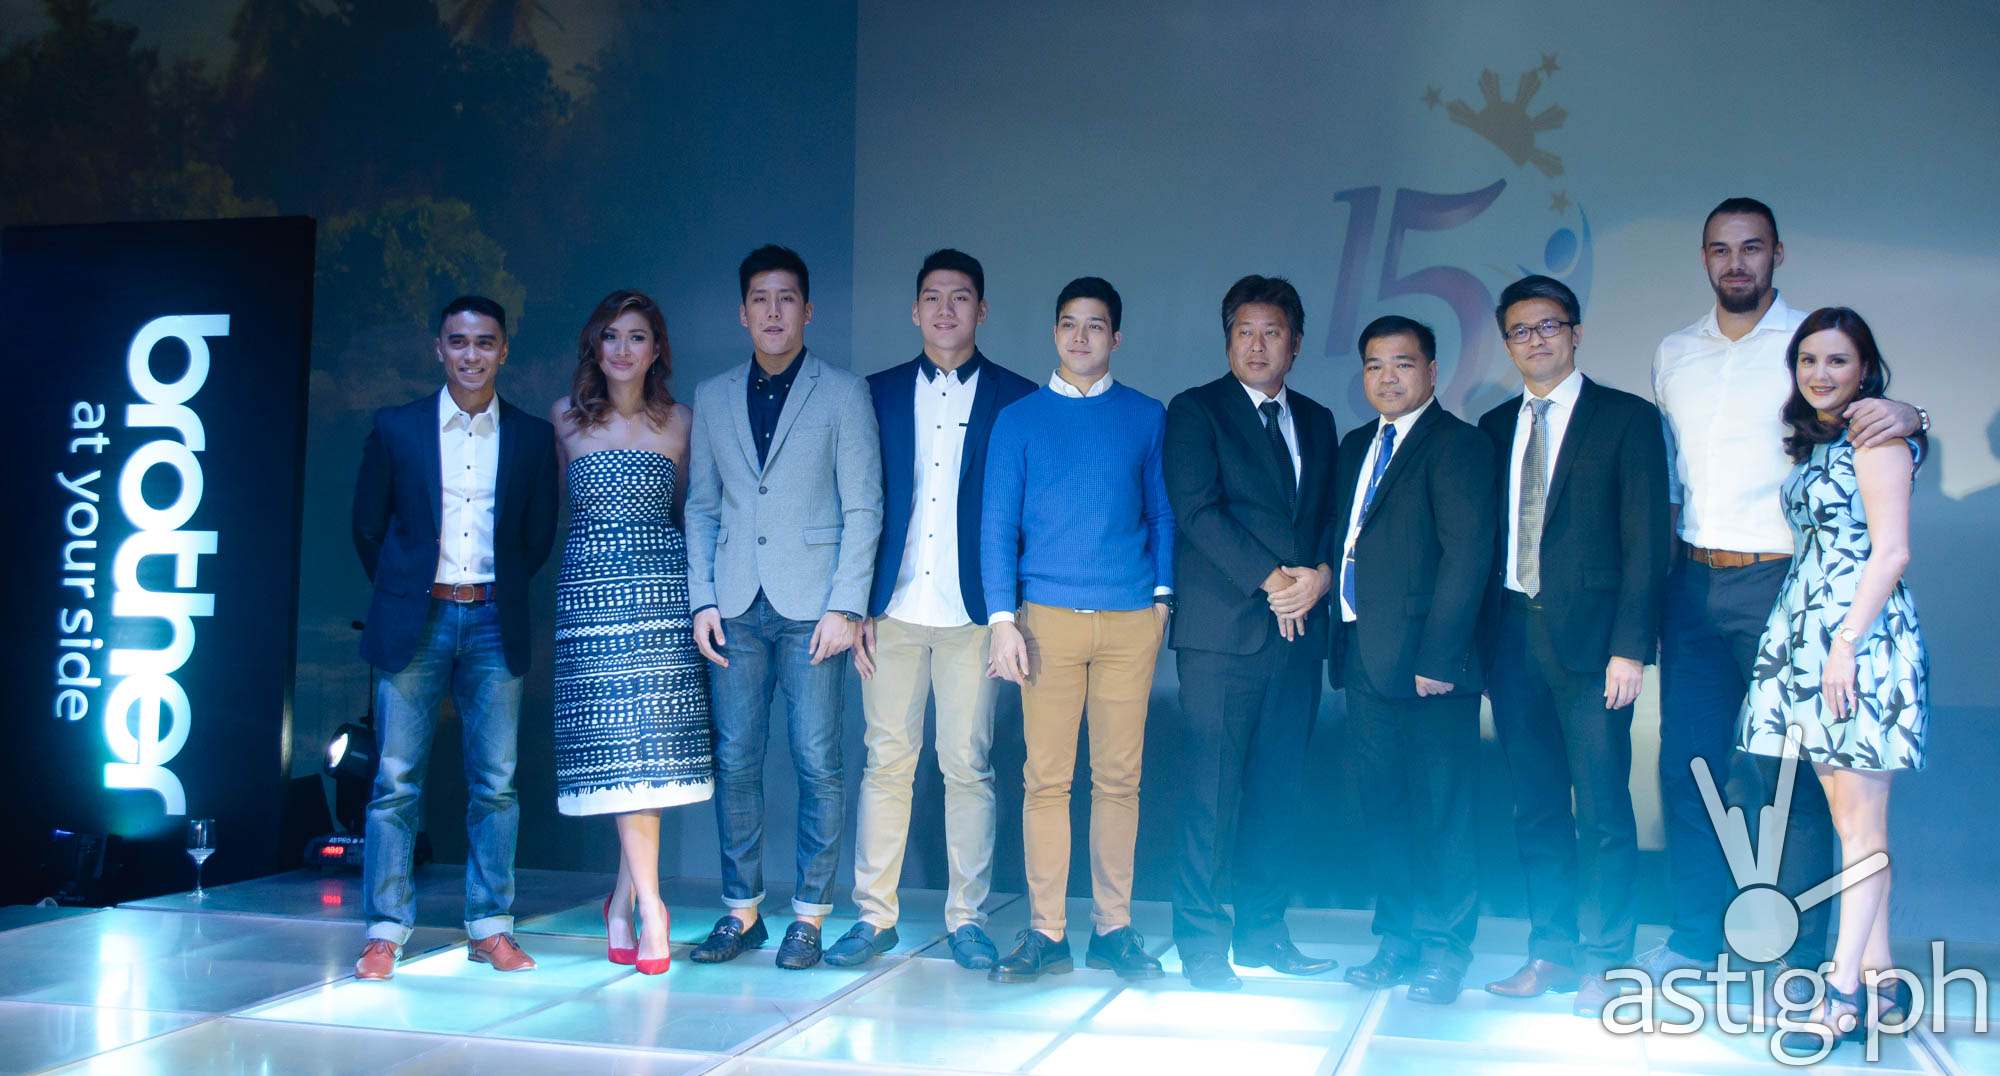 Brother Philippines 15th anniversary celebration (left to right: Boom Gonzales, Phoemela Barranda, Jeric and Jeron Teng, Elmo Magalona, Masao Kasagi, Glenn Hocson, Lim Heng Boon, Doug and Cheska Kramer)